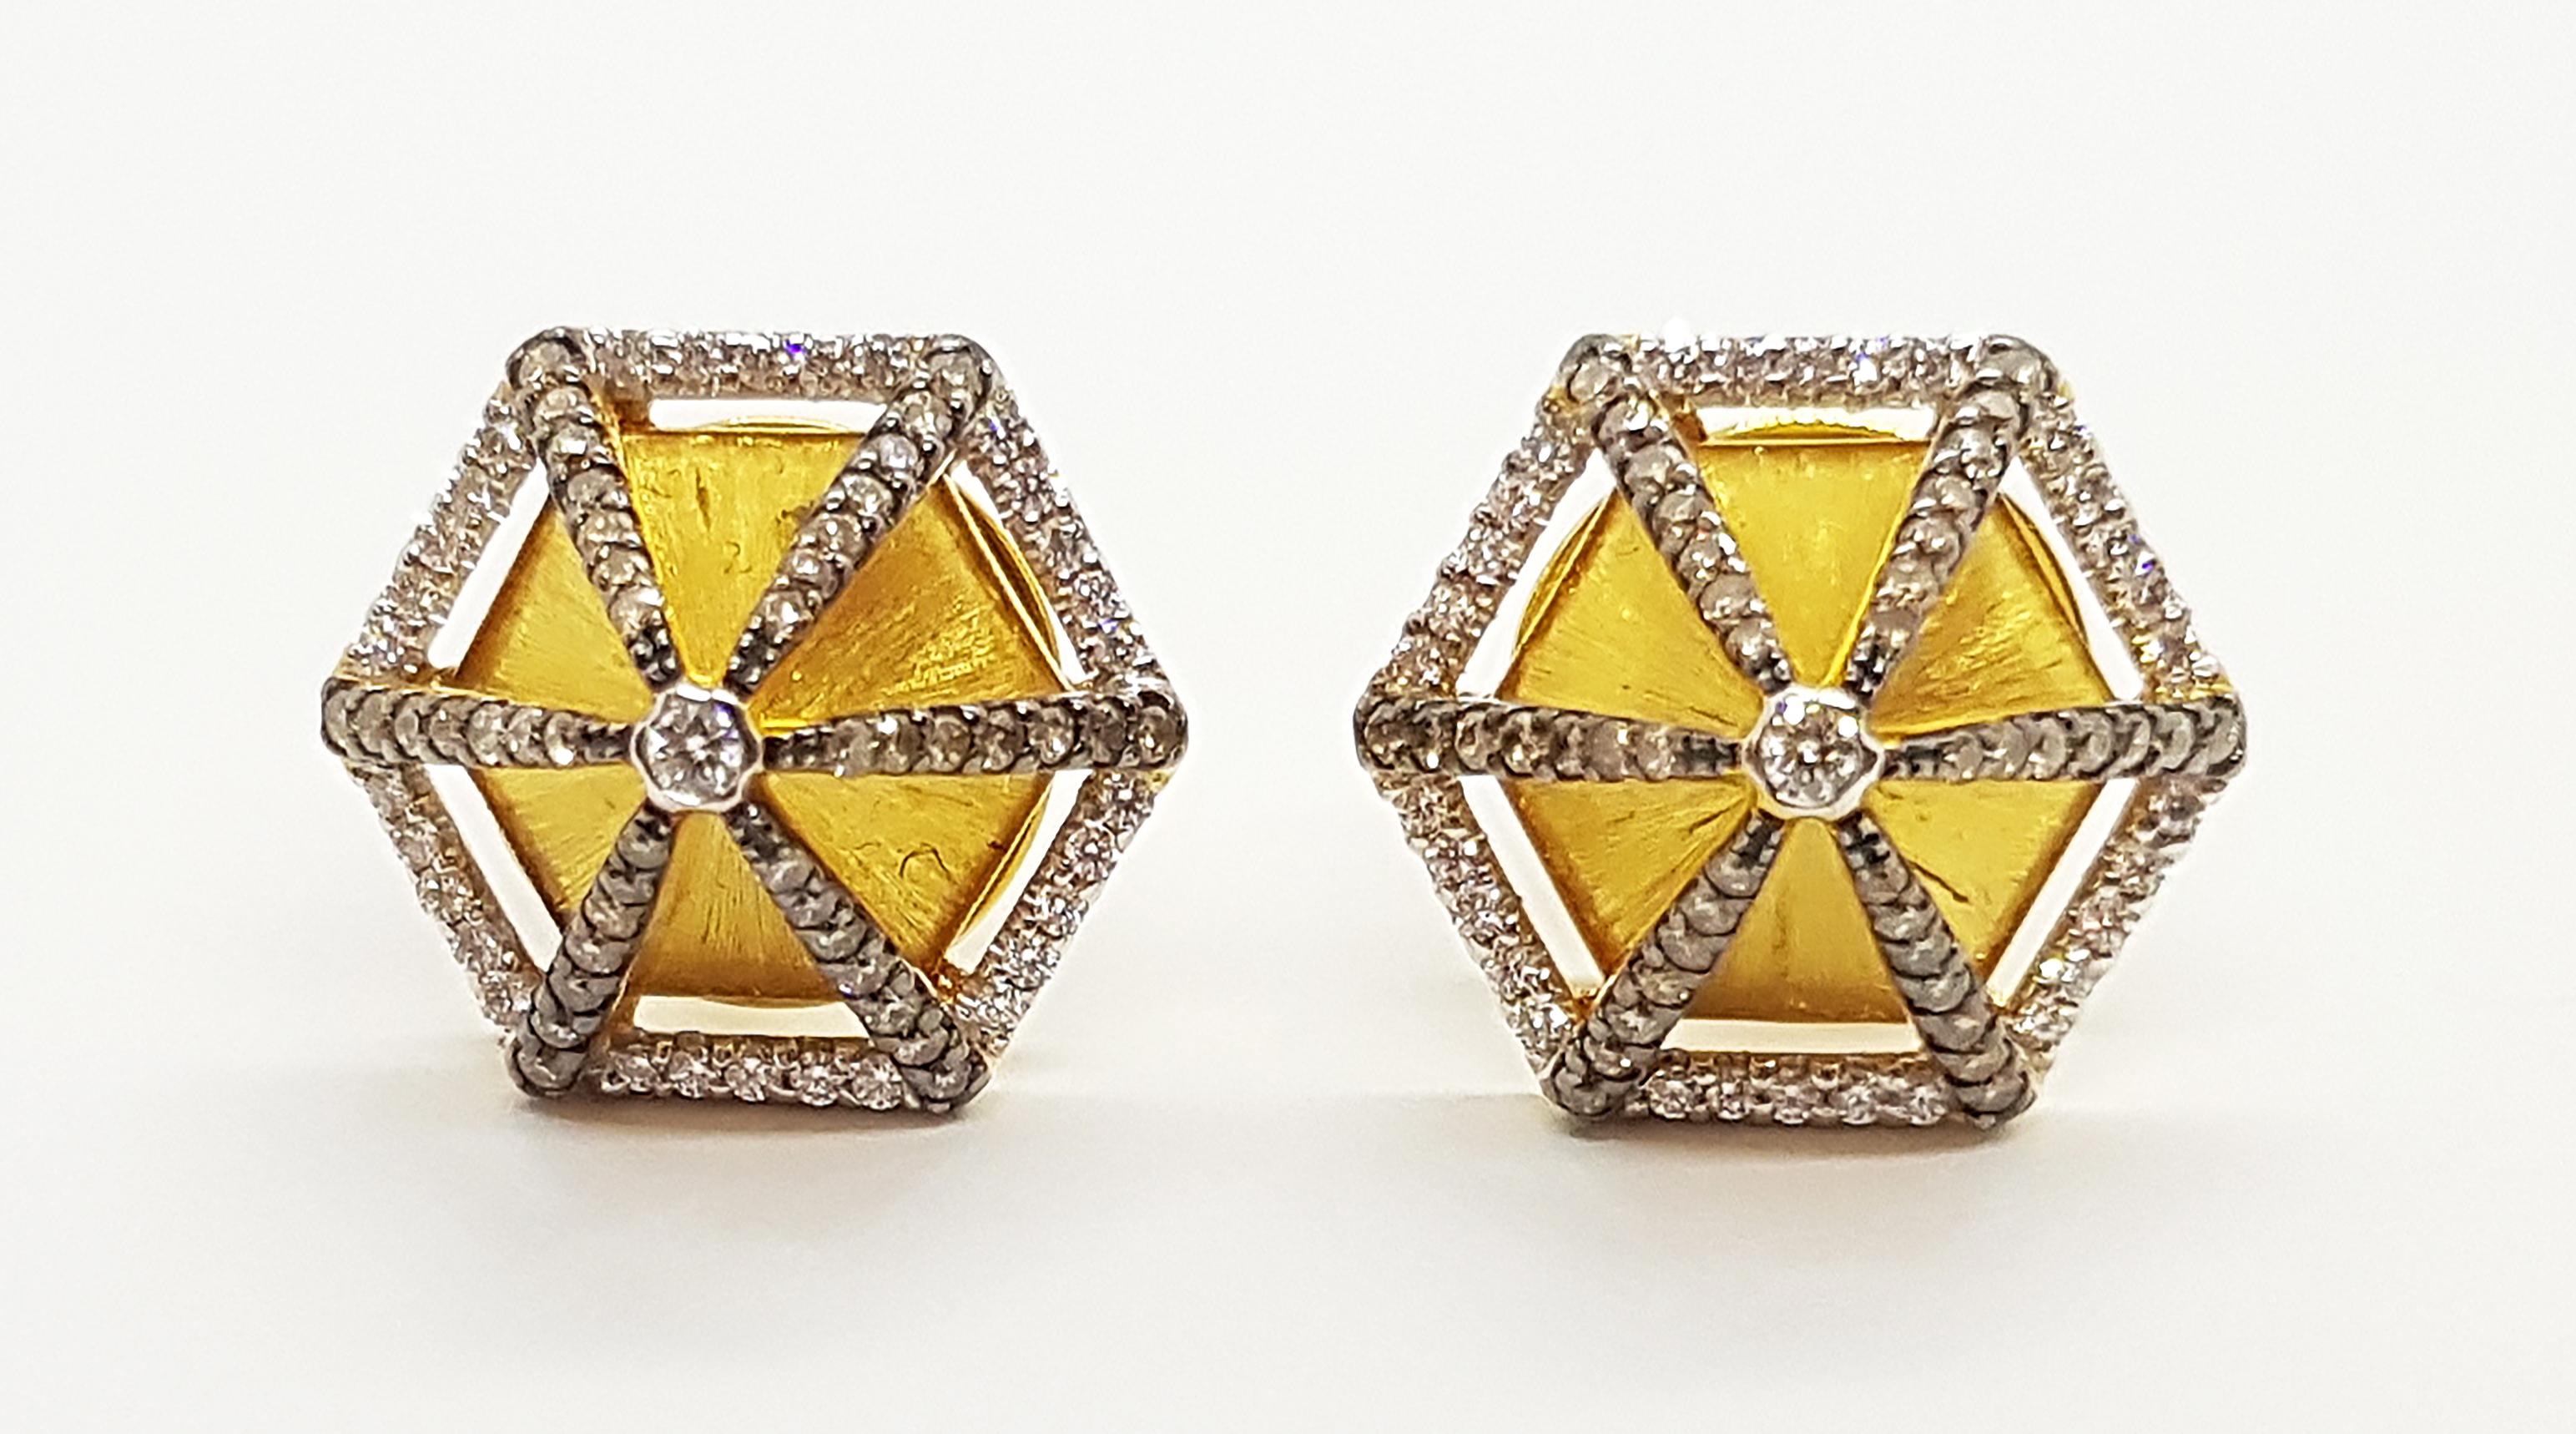 Brown Diamond 0.44 carat with Diamond 0.27 carat Earrings set in 18 Karat Gold Settings

Width:  1.6 cm 
Length:  1.6 cm
Total Weight: 10.65 grams

FOUNDED BY AWARD-WINNING COUPLE, NUTTAPON (KENNY) & SHAR-LINN, KAVANT & SHARART IS A FINE JEWELRY